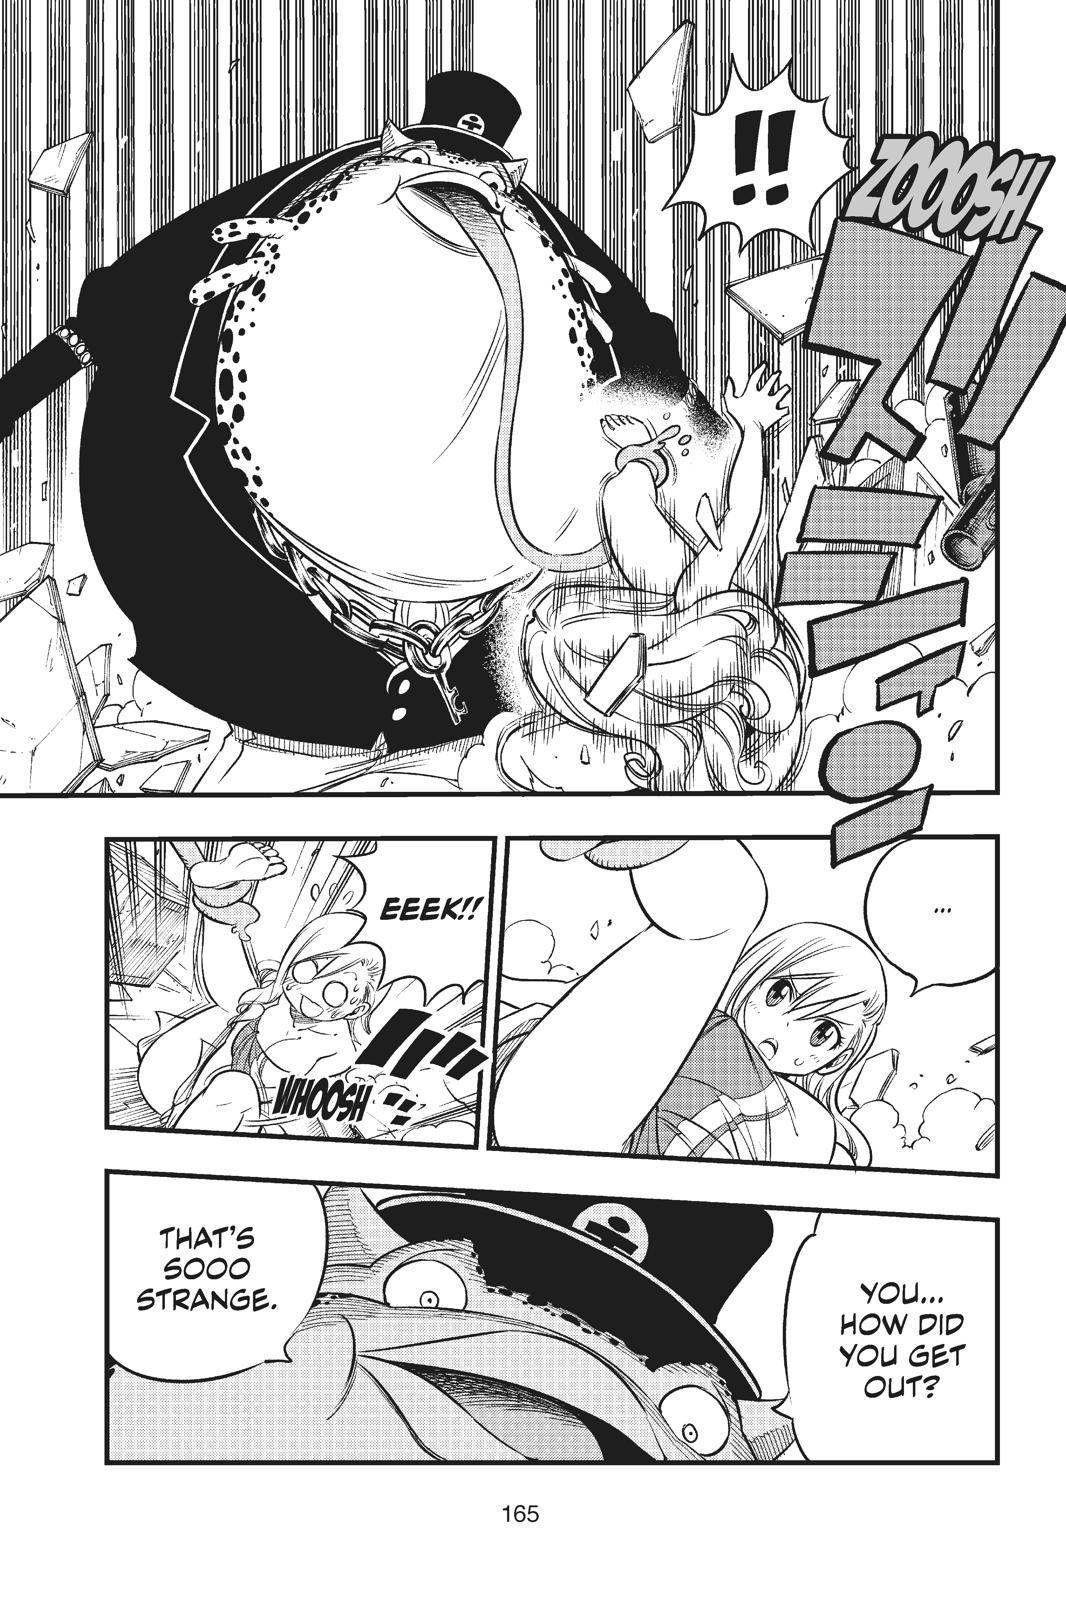 Eden's Zero Manga Volume 22